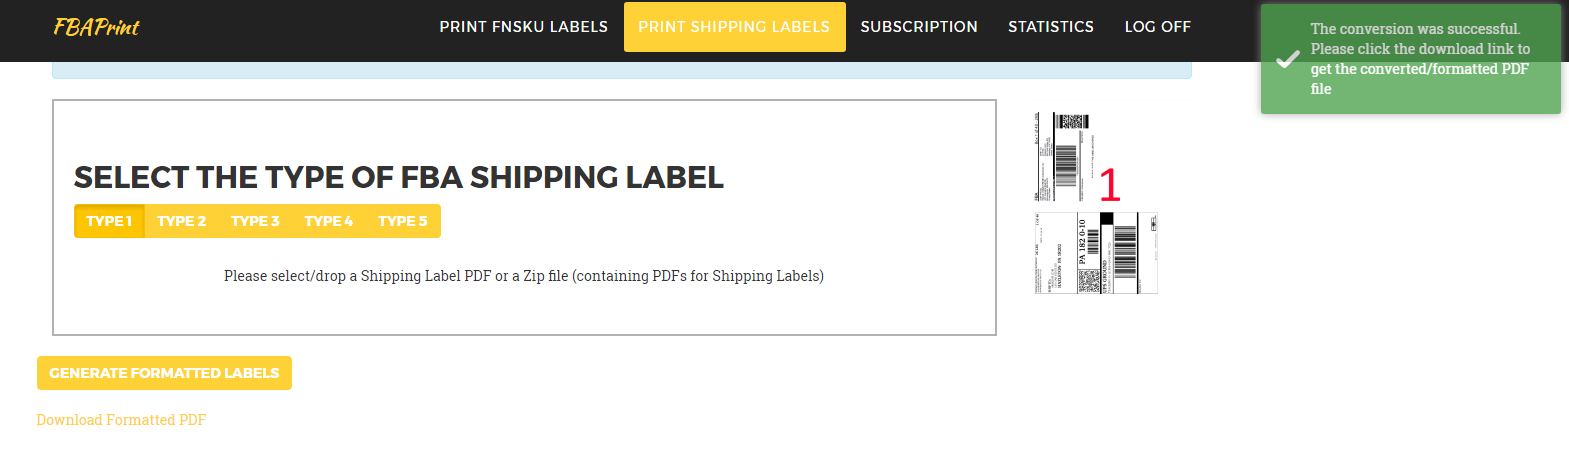 Product Label Converter Screenshot - Step 3